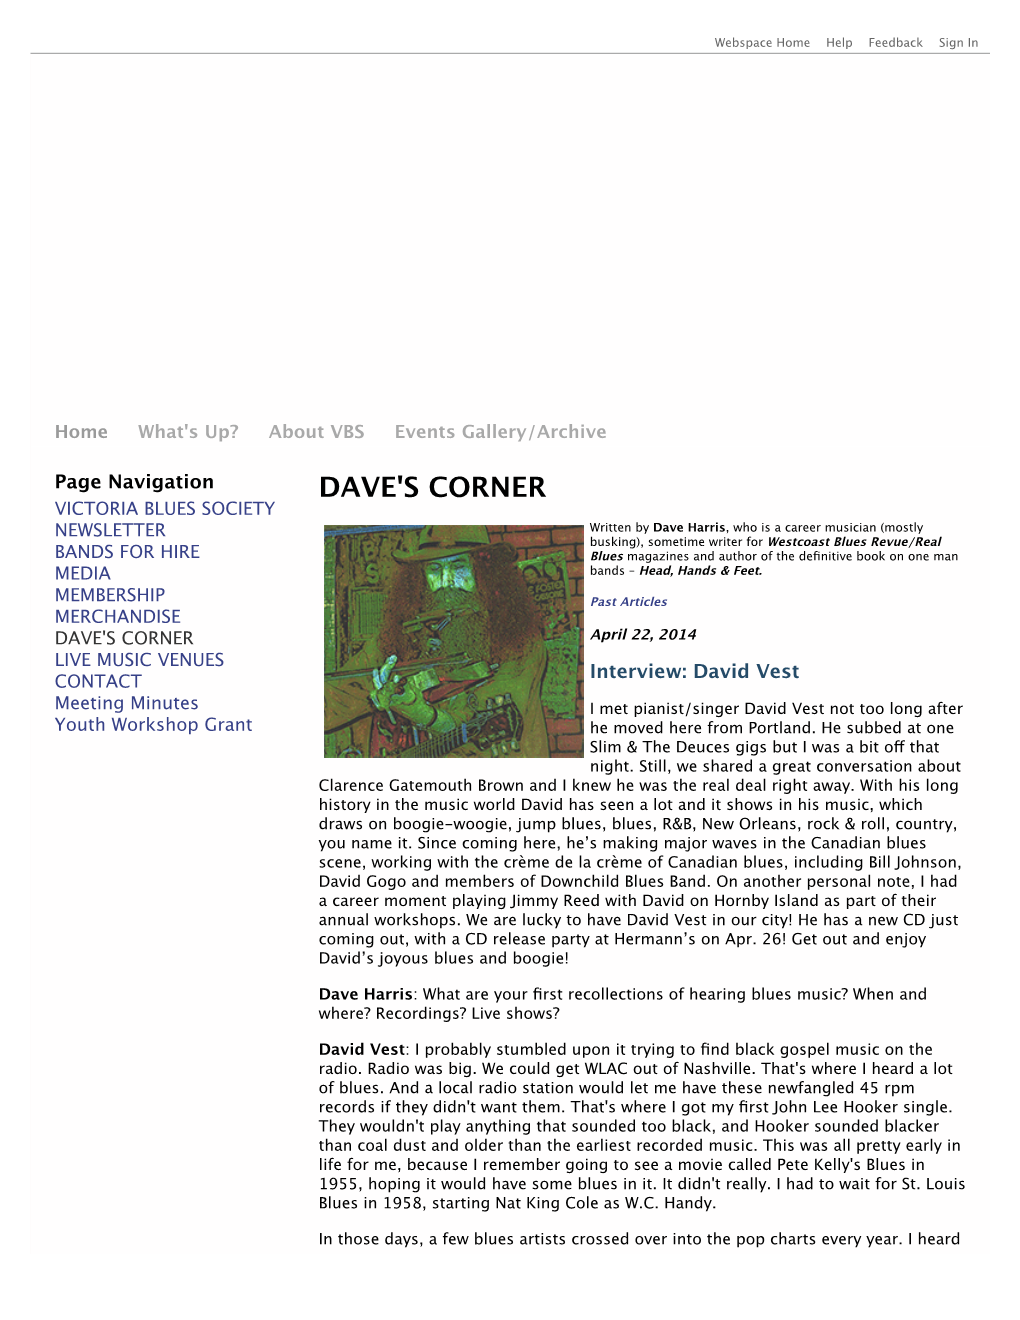 Dave's Corner